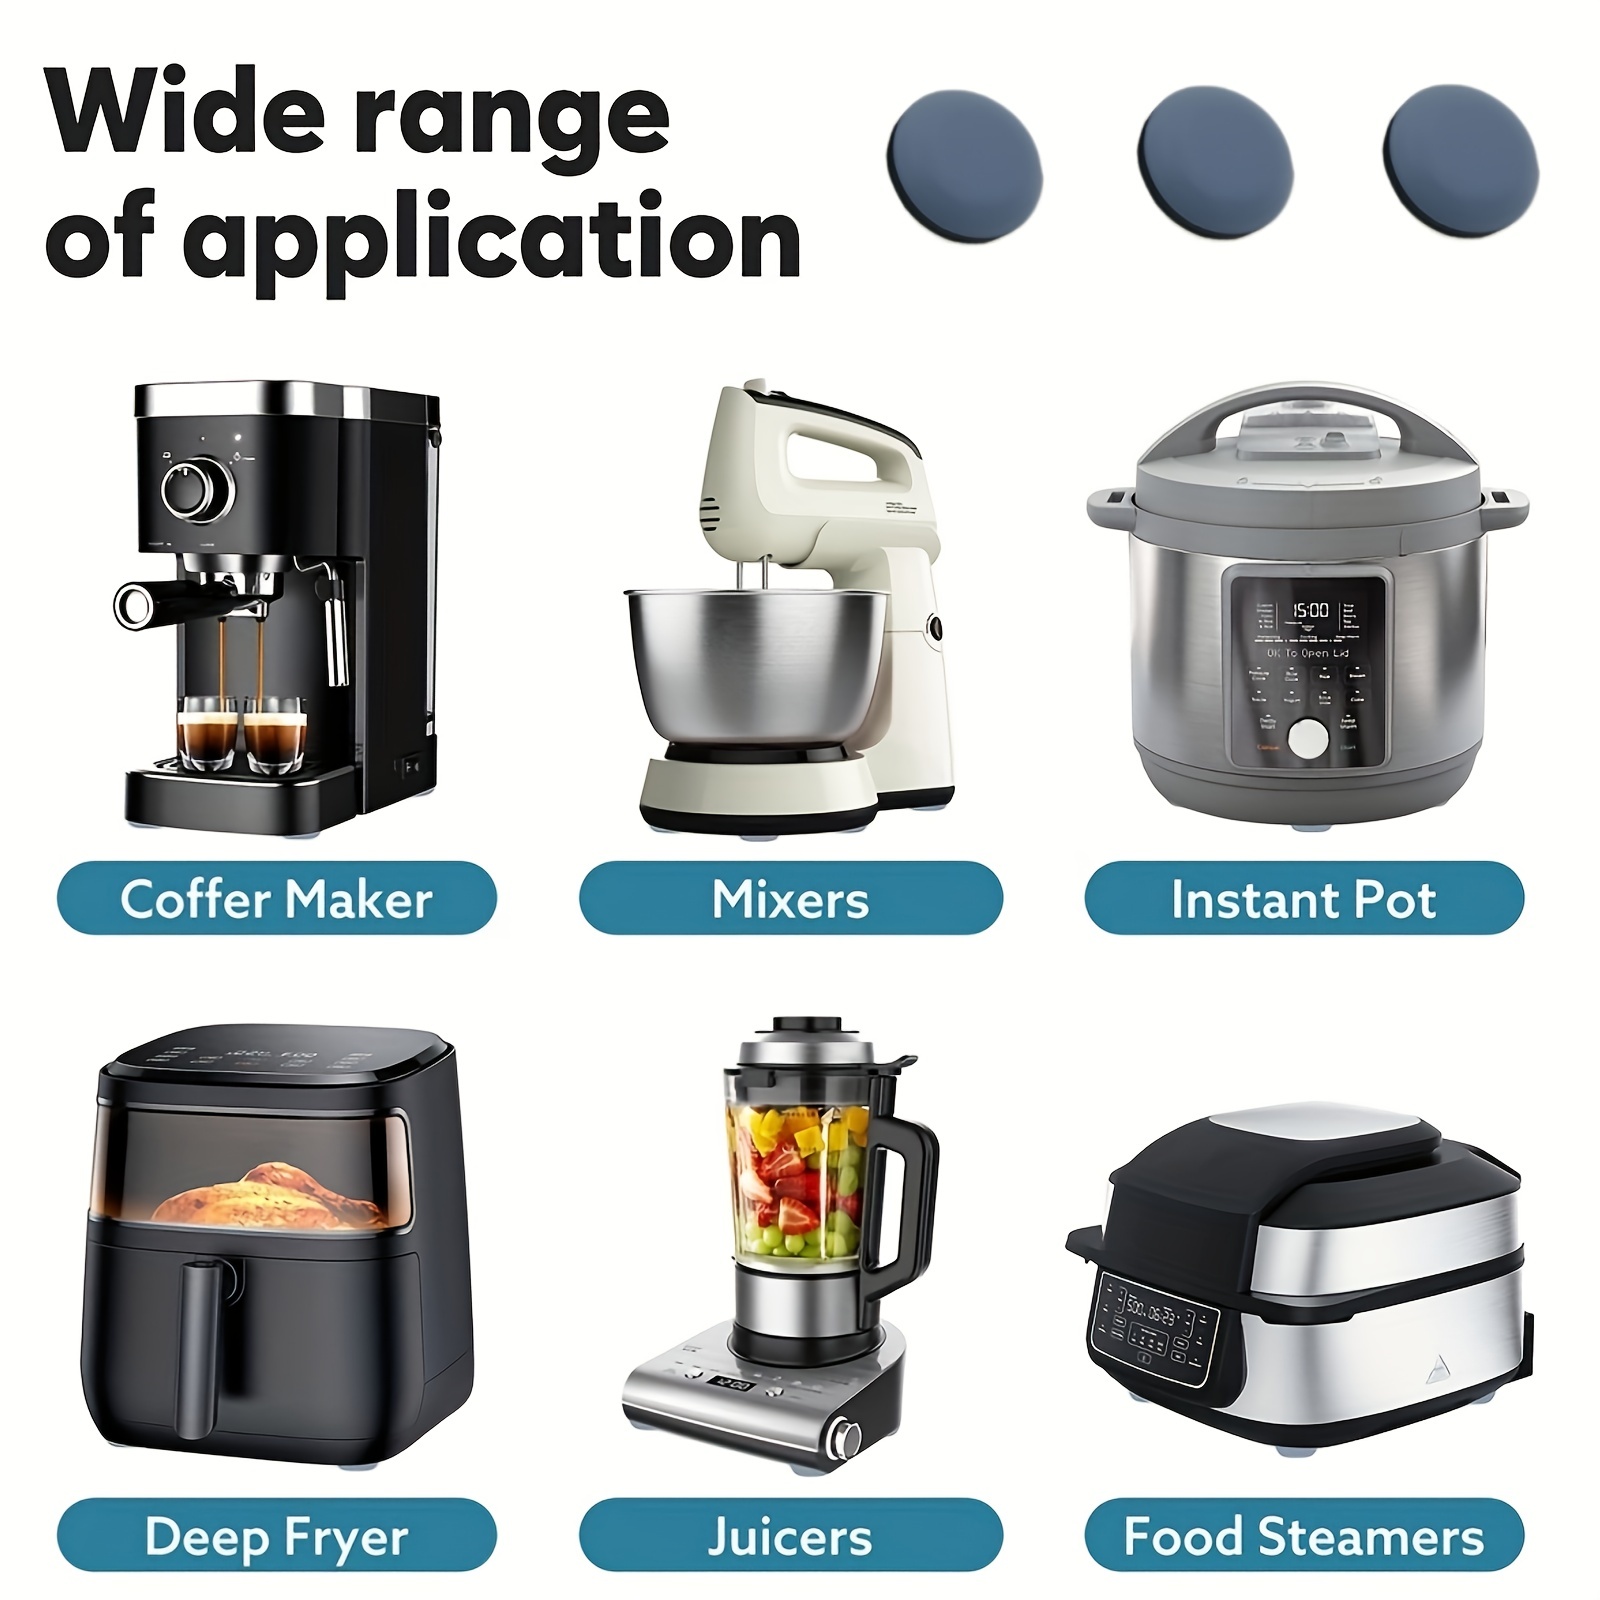 12 Pcs Kitchen Appliance Slider,Appliance Sliders for Kitchen Appliances,DIY Self Adhesive Appliance Slider for Most Coffee Makers,Blenders,Kitchen